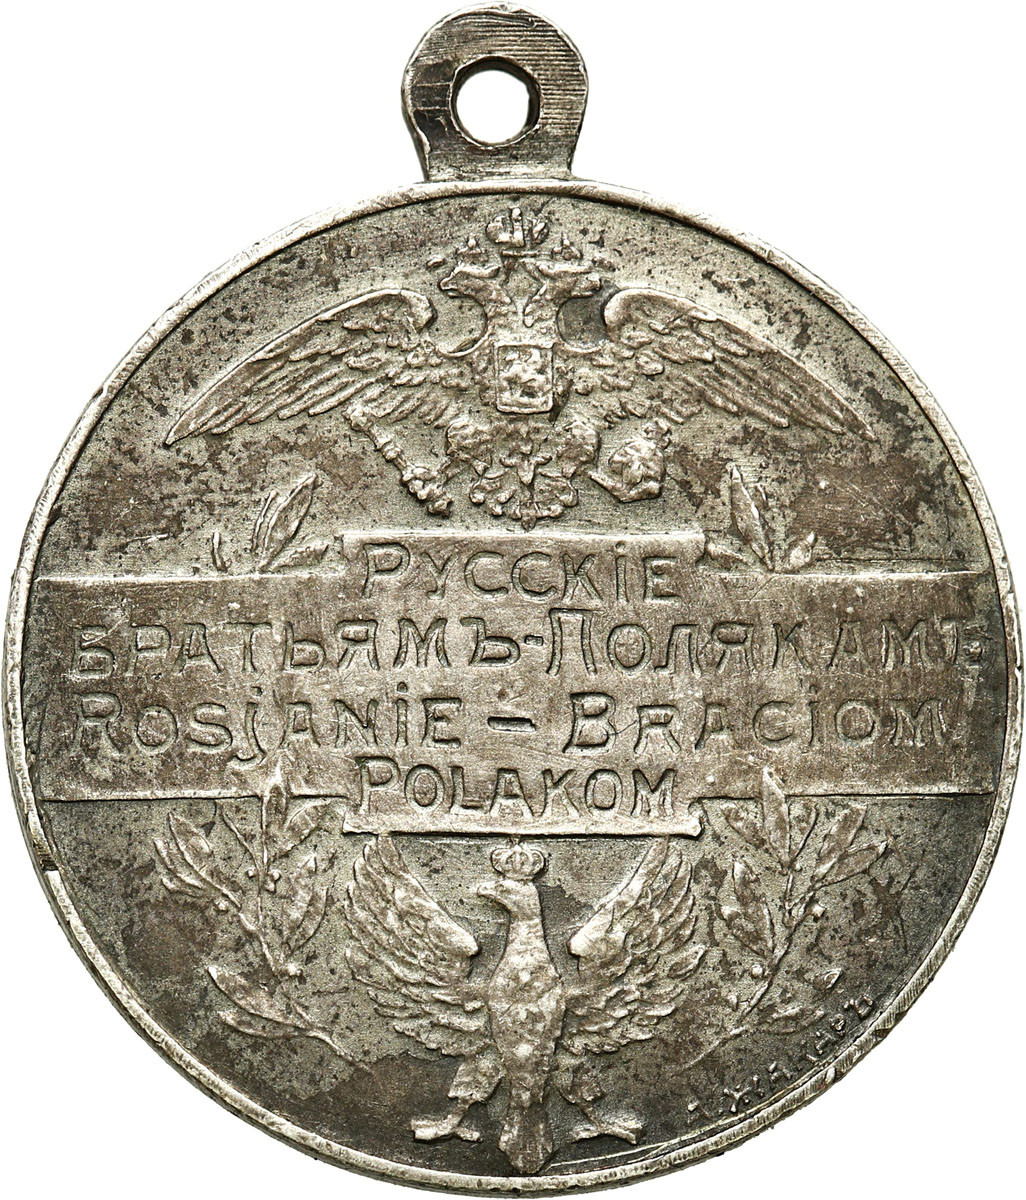 Polska. Medal Rosjanie Braciom Polakom 1914, wariant 24 mm